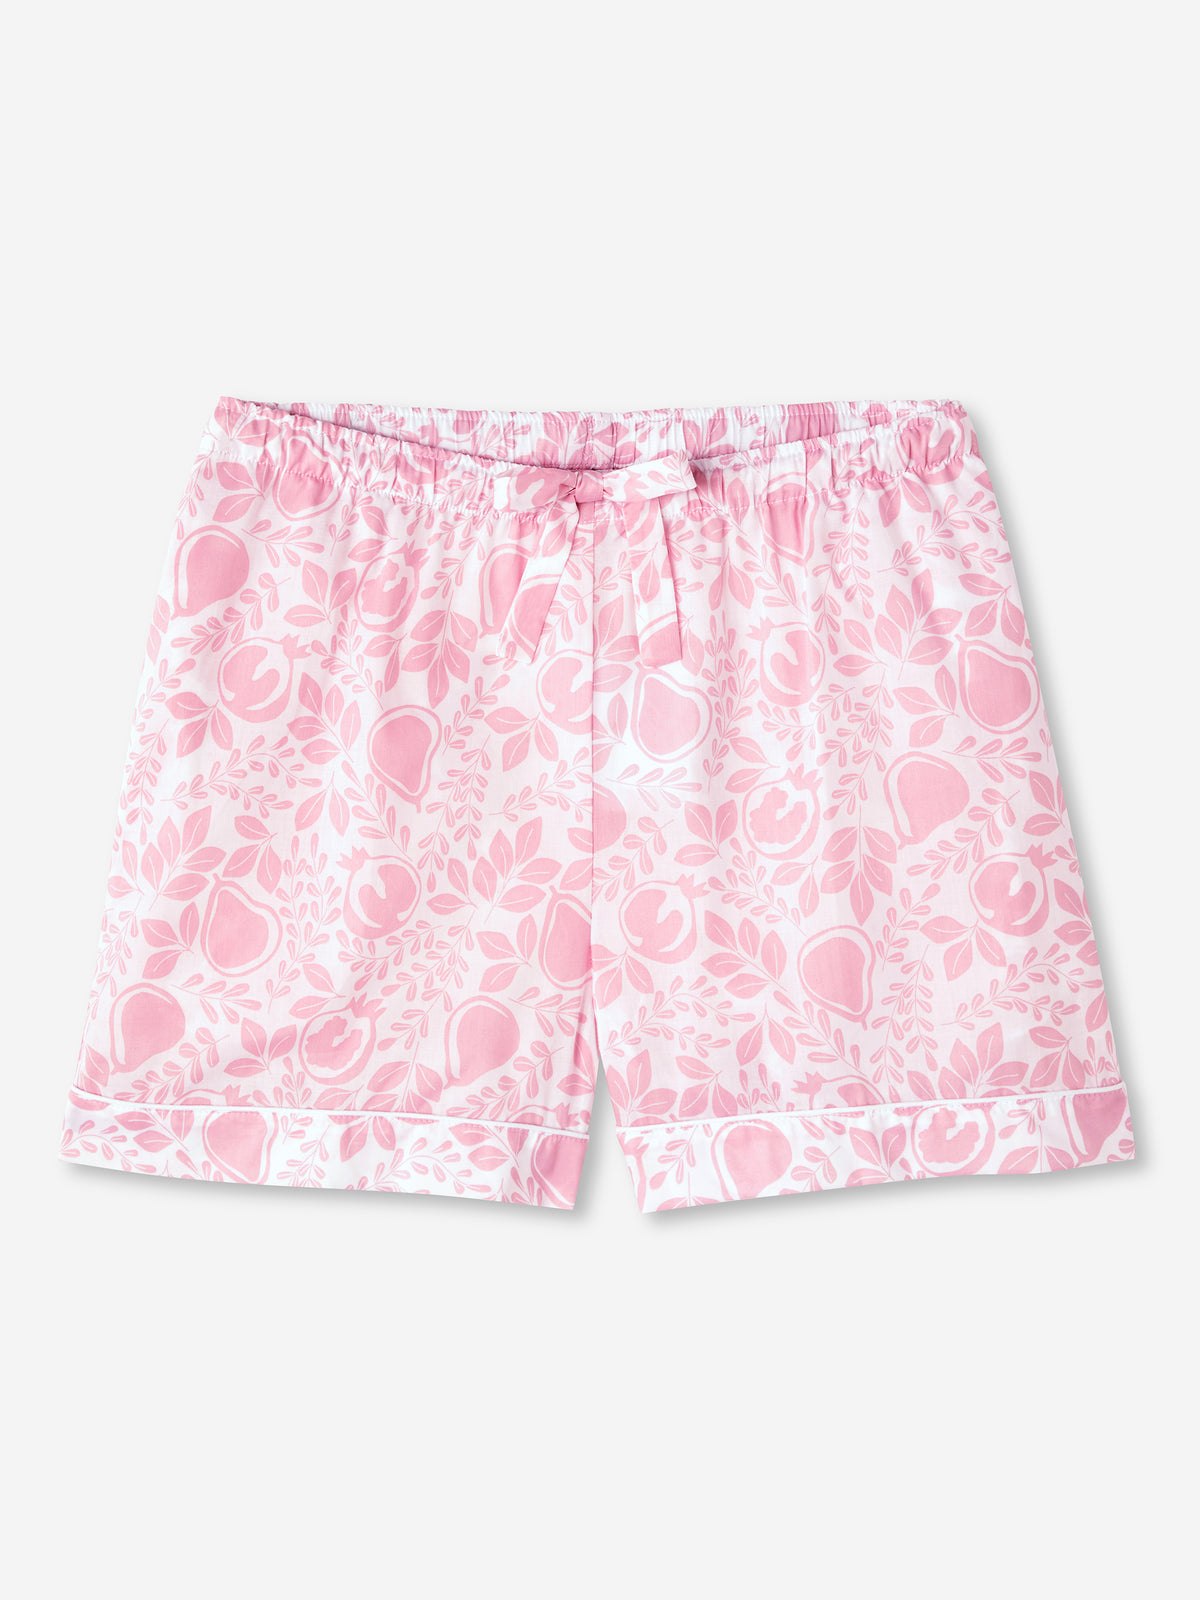 Women's Lounge Shorts Nelson 89 Cotton Batiste Pink